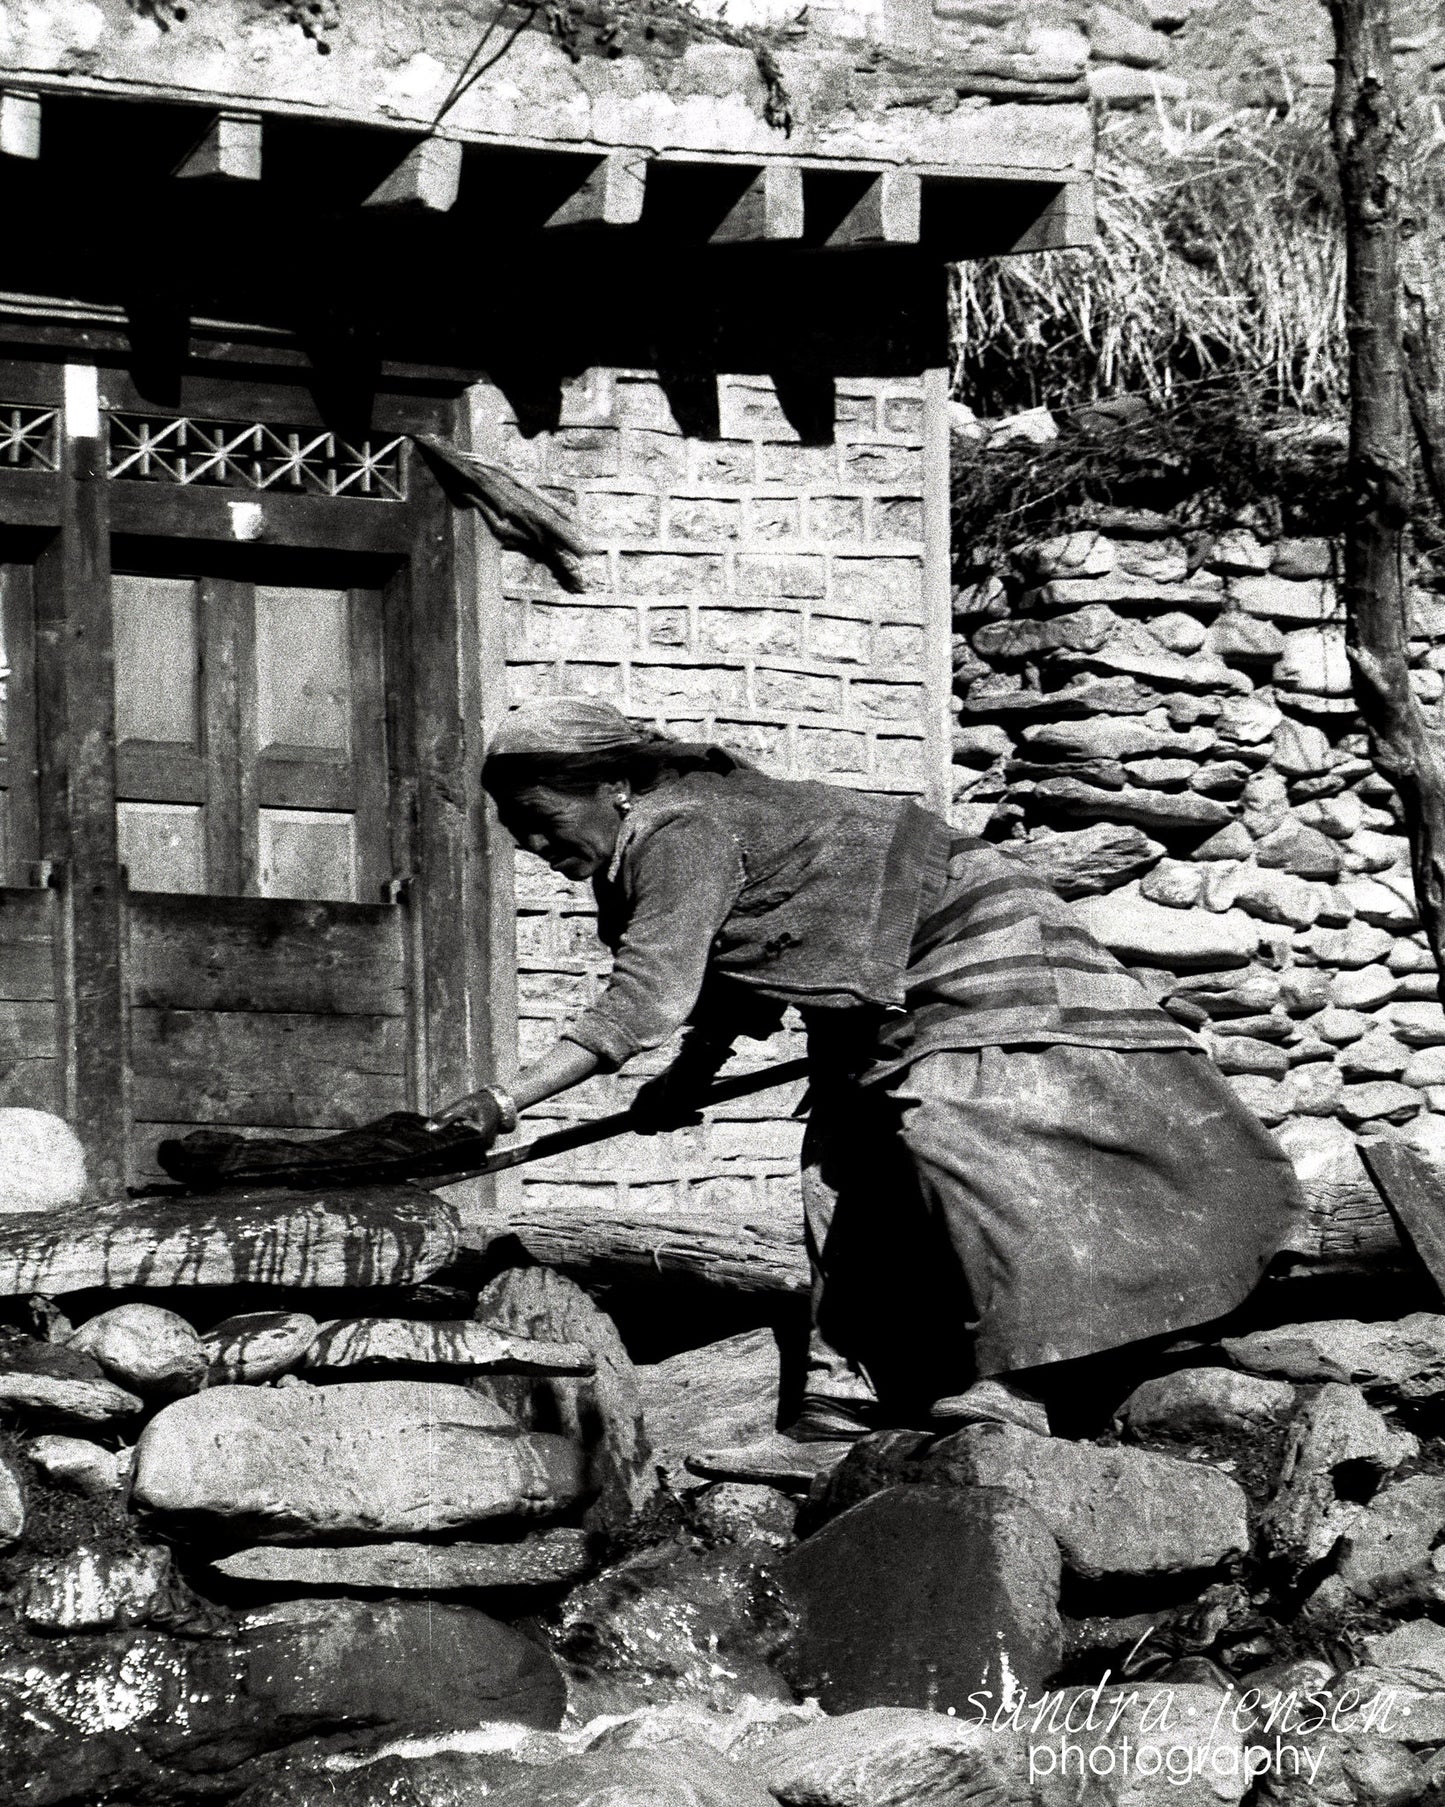 Print - Nepal "Woman Washing Clothes"